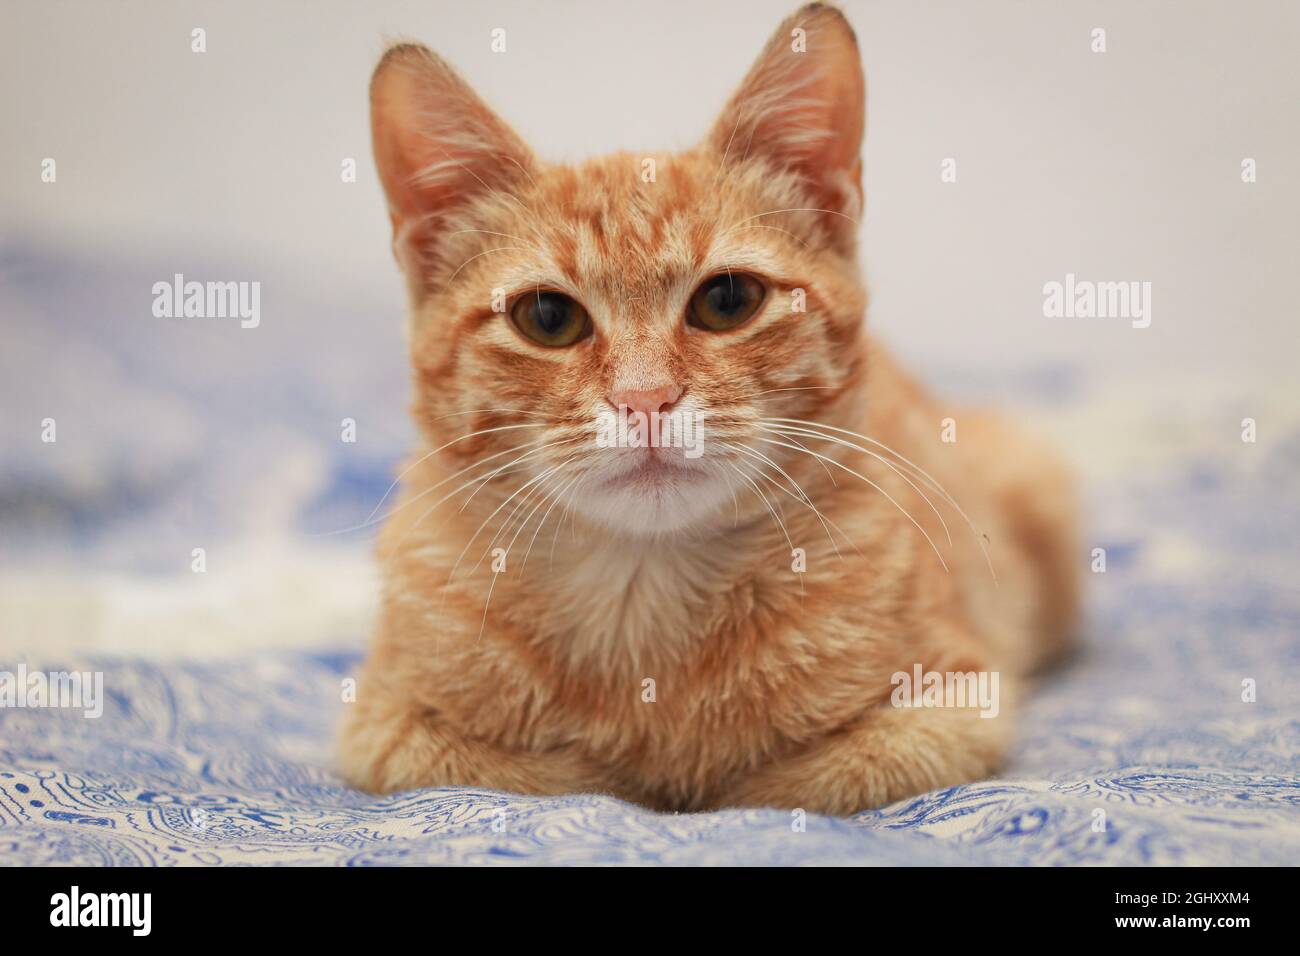 Small cat sitting Stock Photo